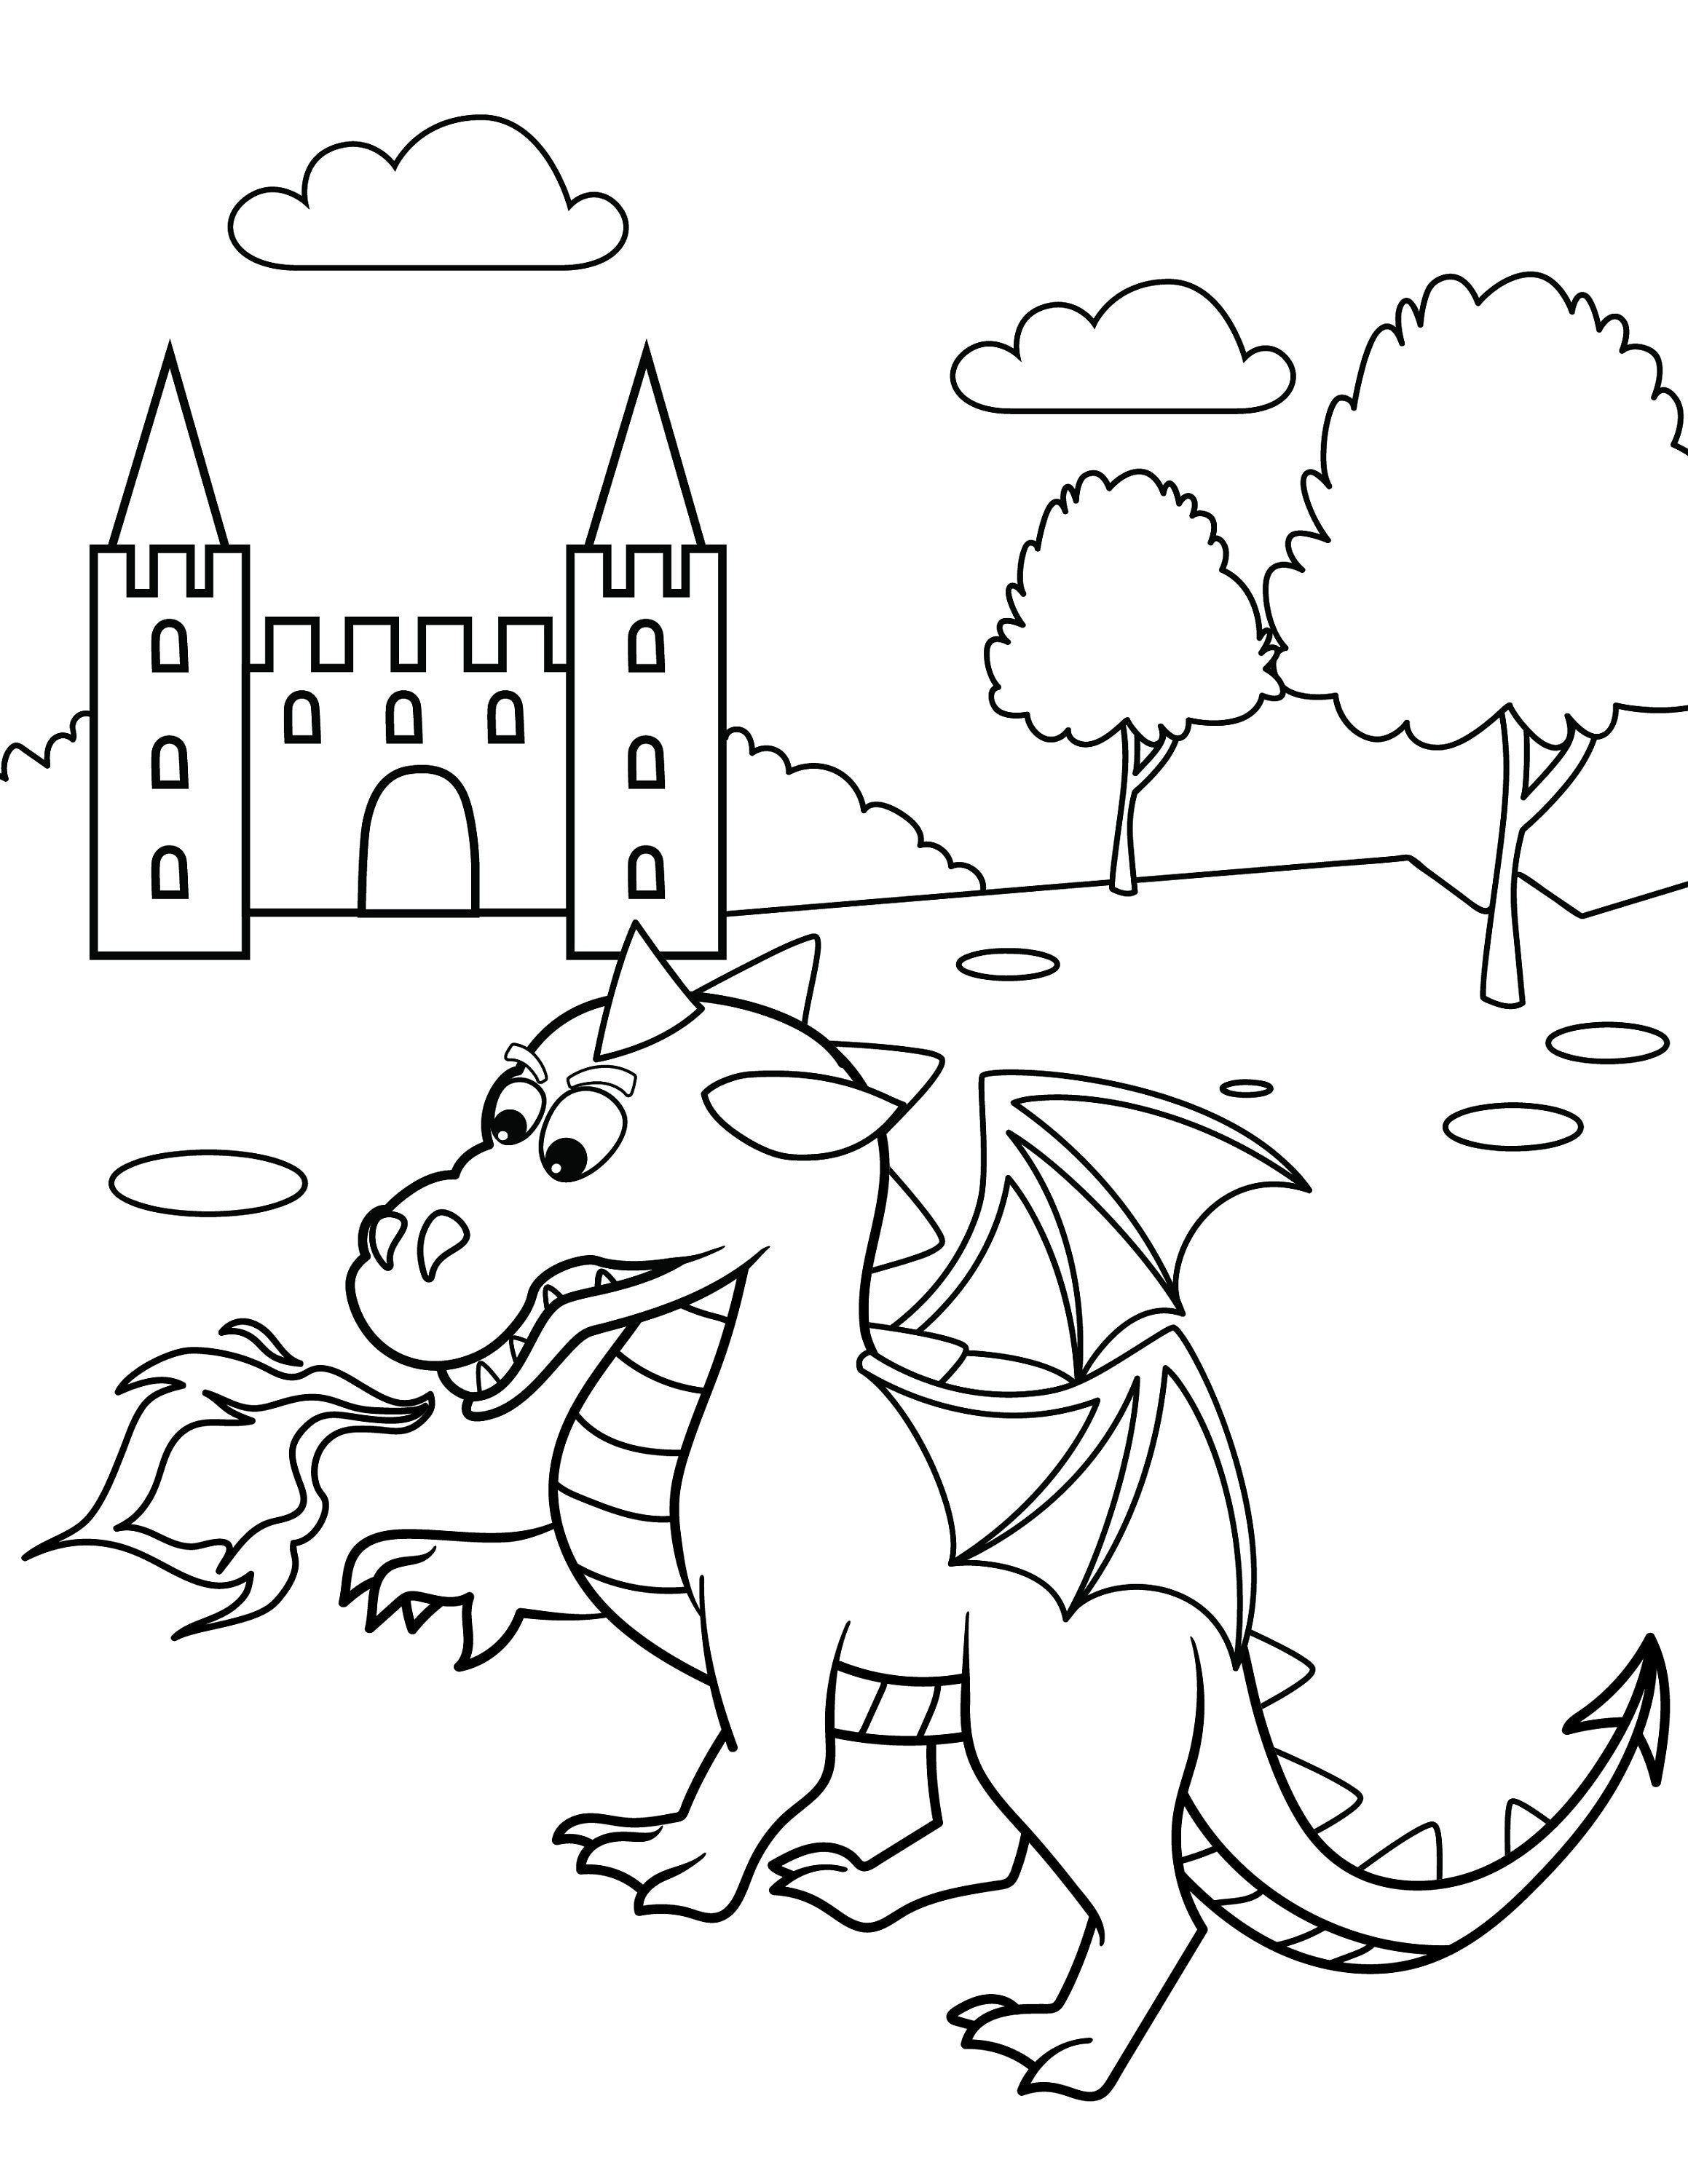 Ctosree 24 Pcs Dragon Coloring Books for Kids Dragon Party Castle